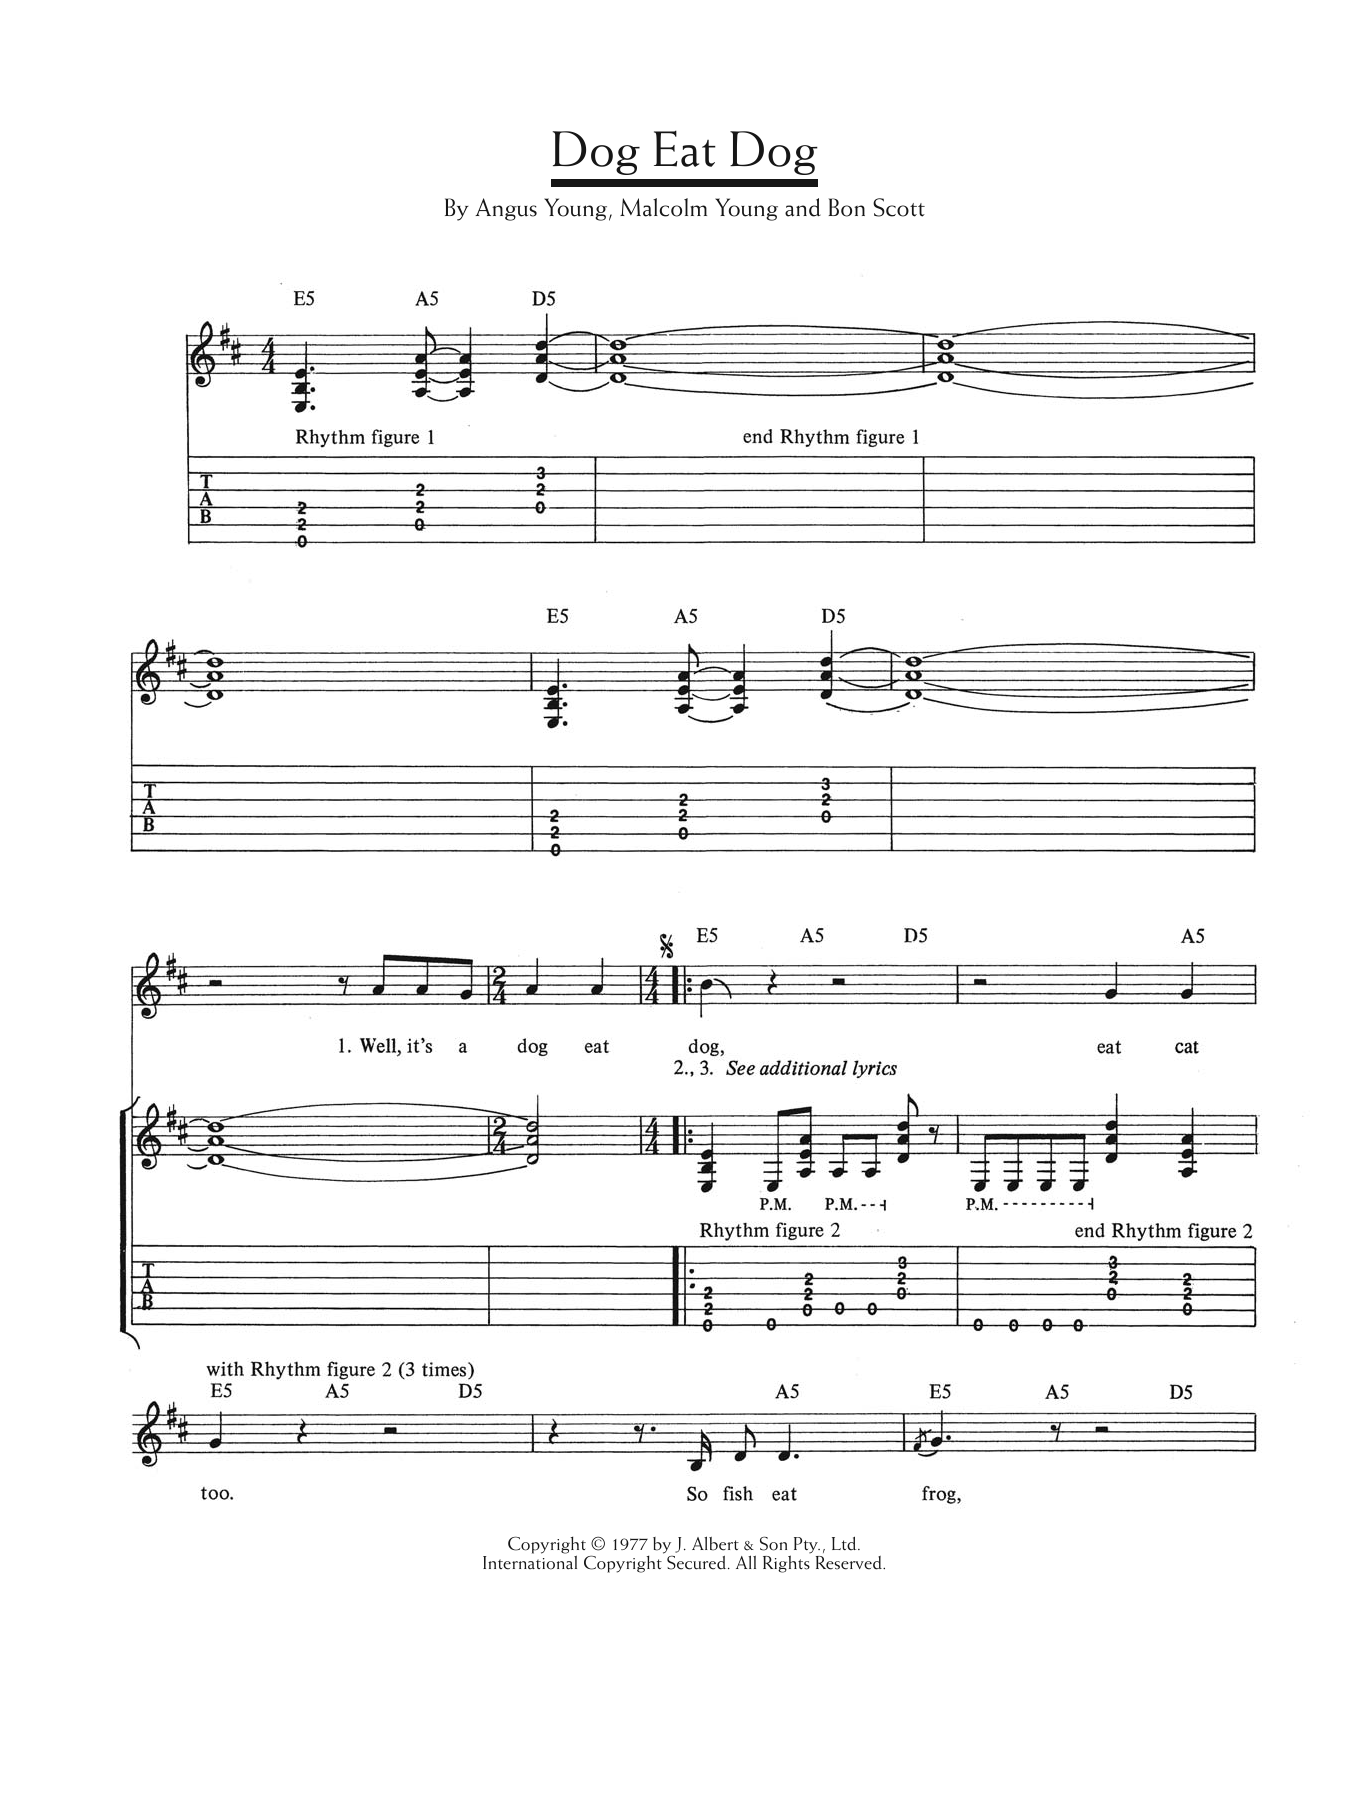 AC/DC Dog Eat Dog Sheet Music Notes & Chords for Guitar Tab - Download or Print PDF